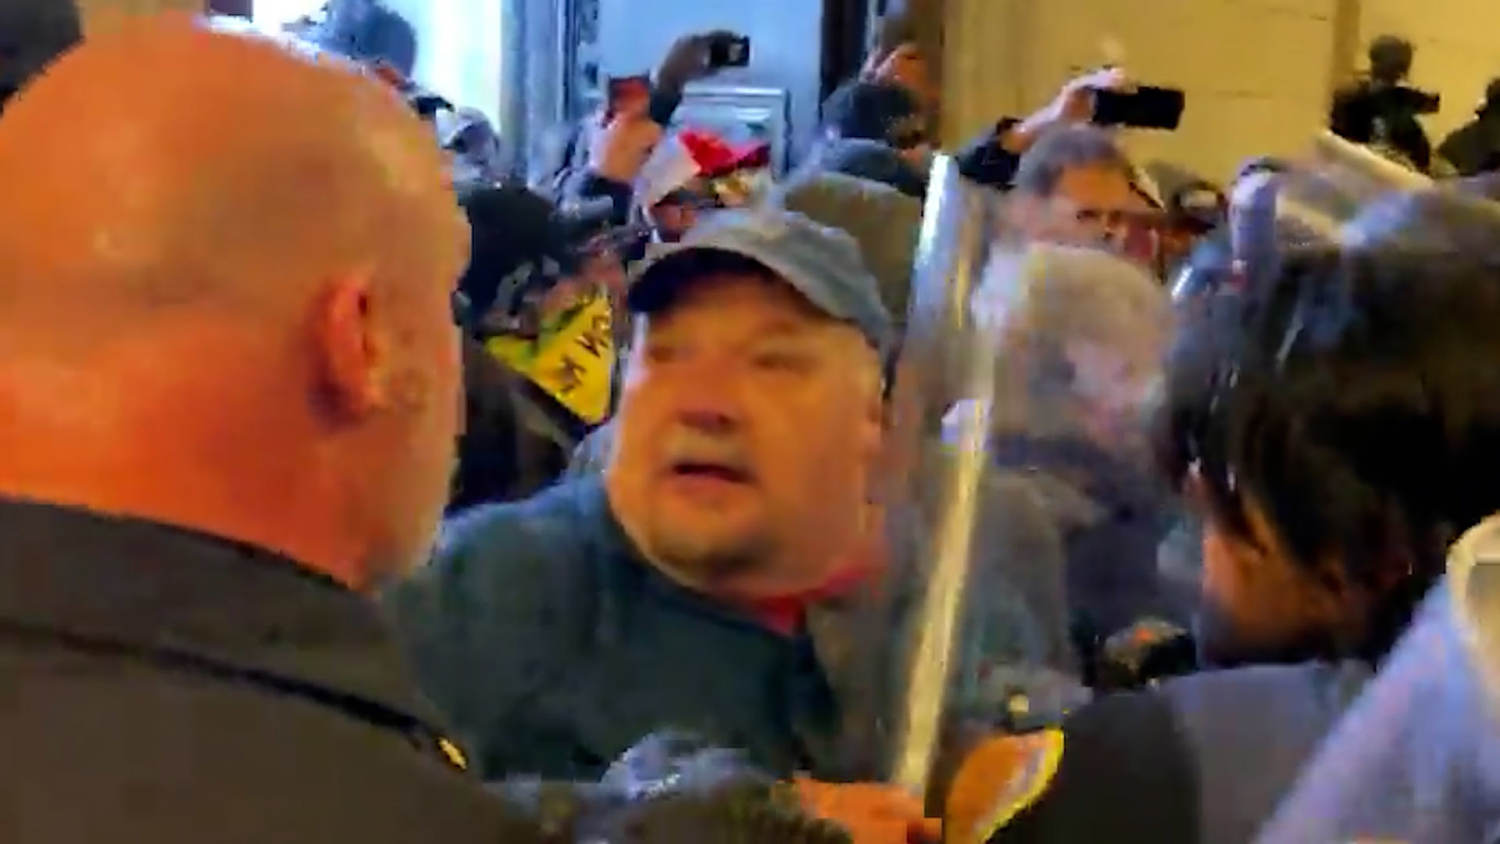 Videos show Joseph Fischer's involvement in the Jan. 6 Capitol riot